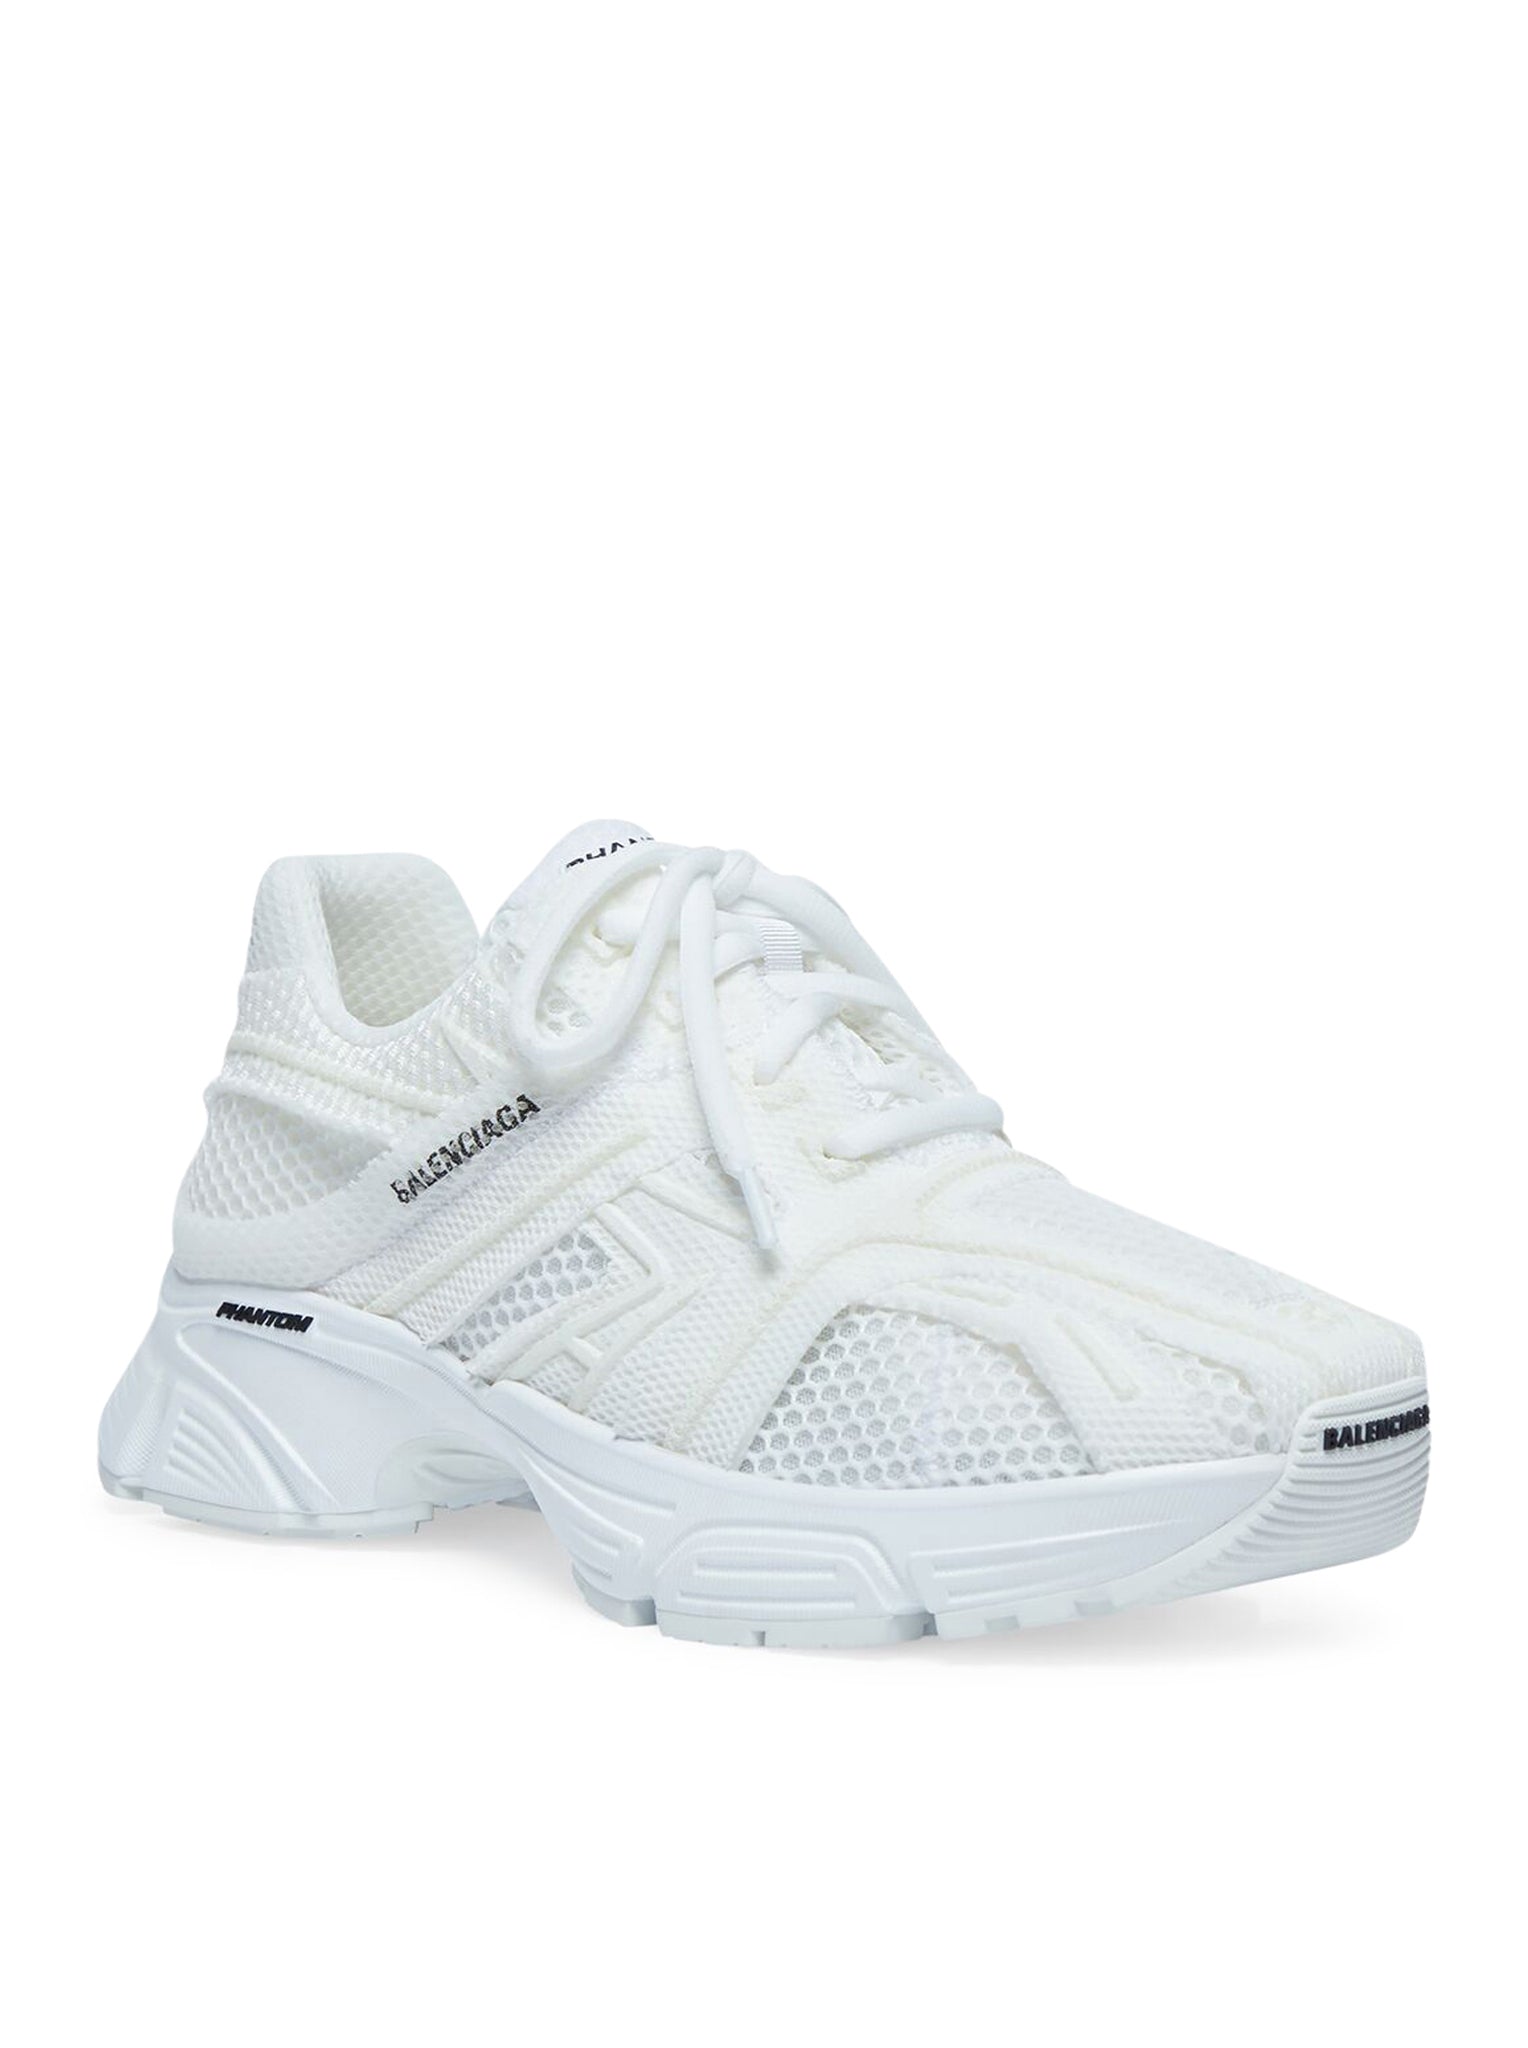 Balenciaga Women's Phantom Sneaker - White - Low-top Sneakers - 36